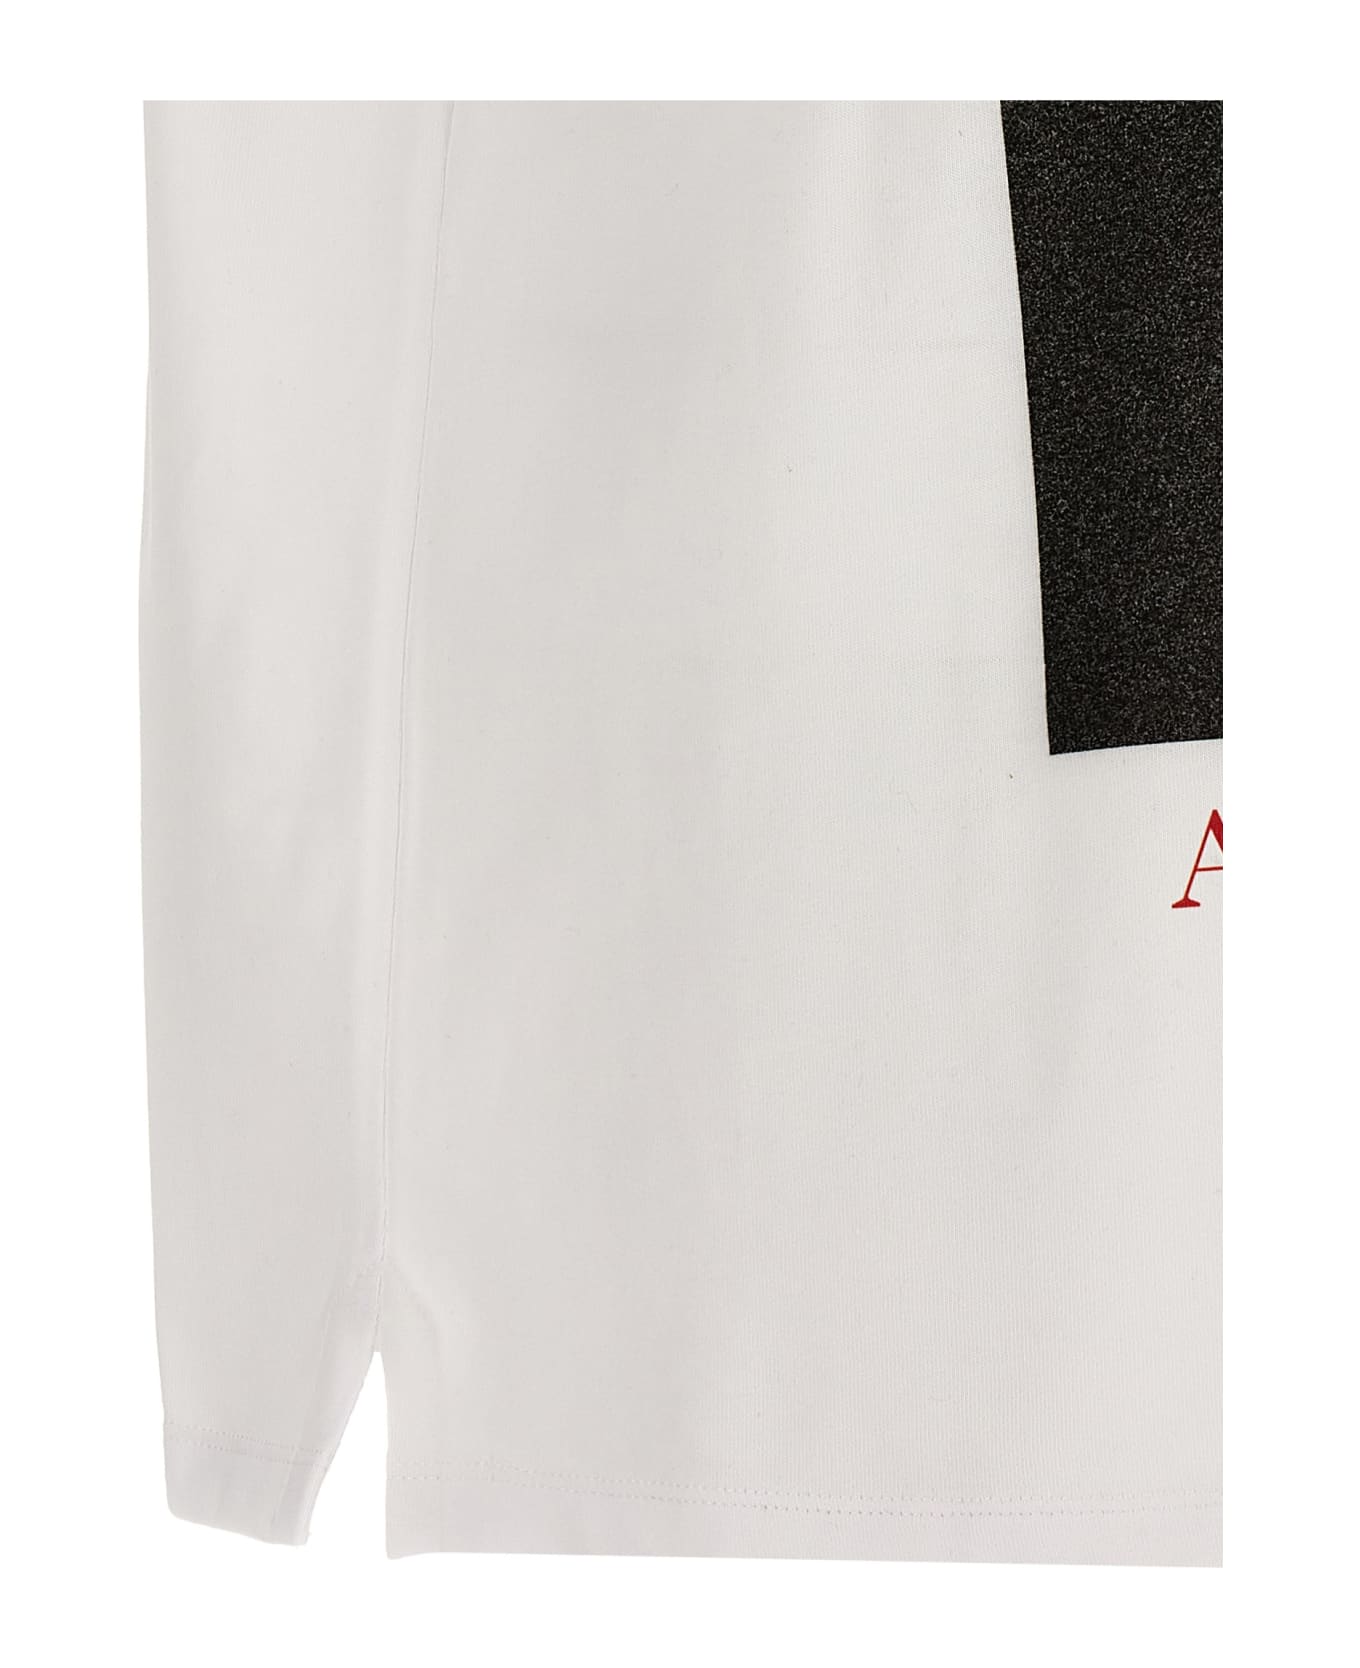 Alexander McQueen Printed T-shirt - White/Black シャツ